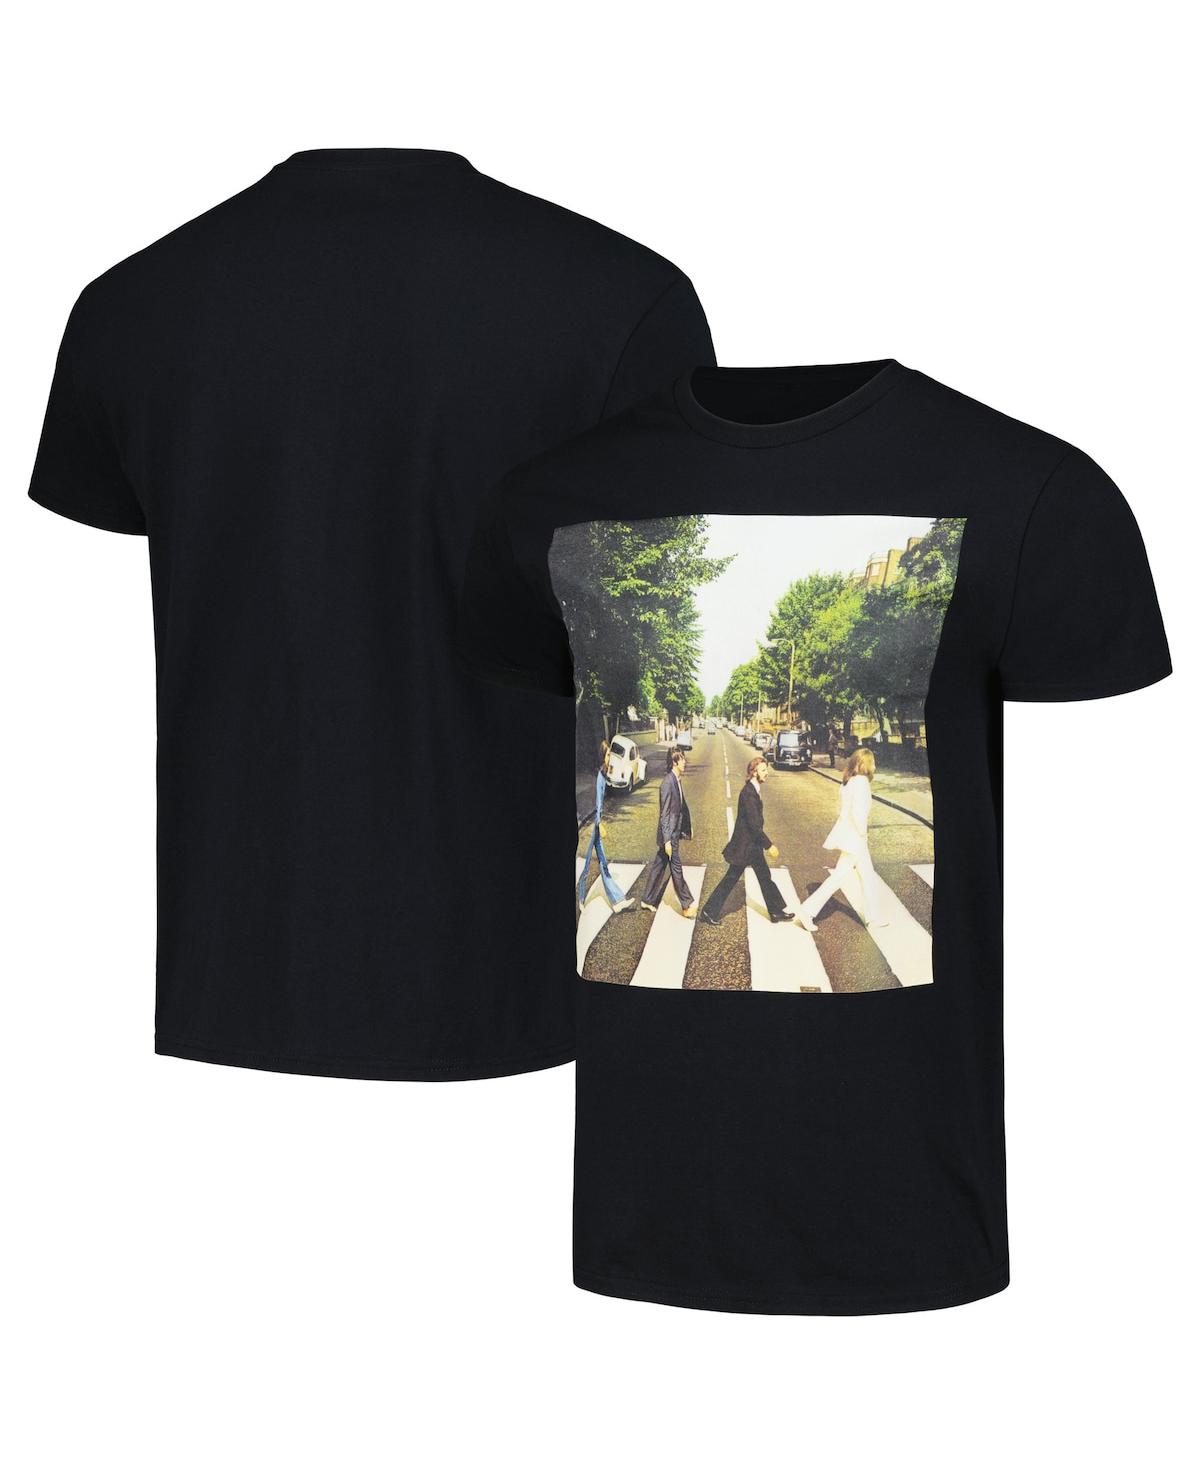 Men's and Women's Black The Beatles Abbey Road T-shirt - Black